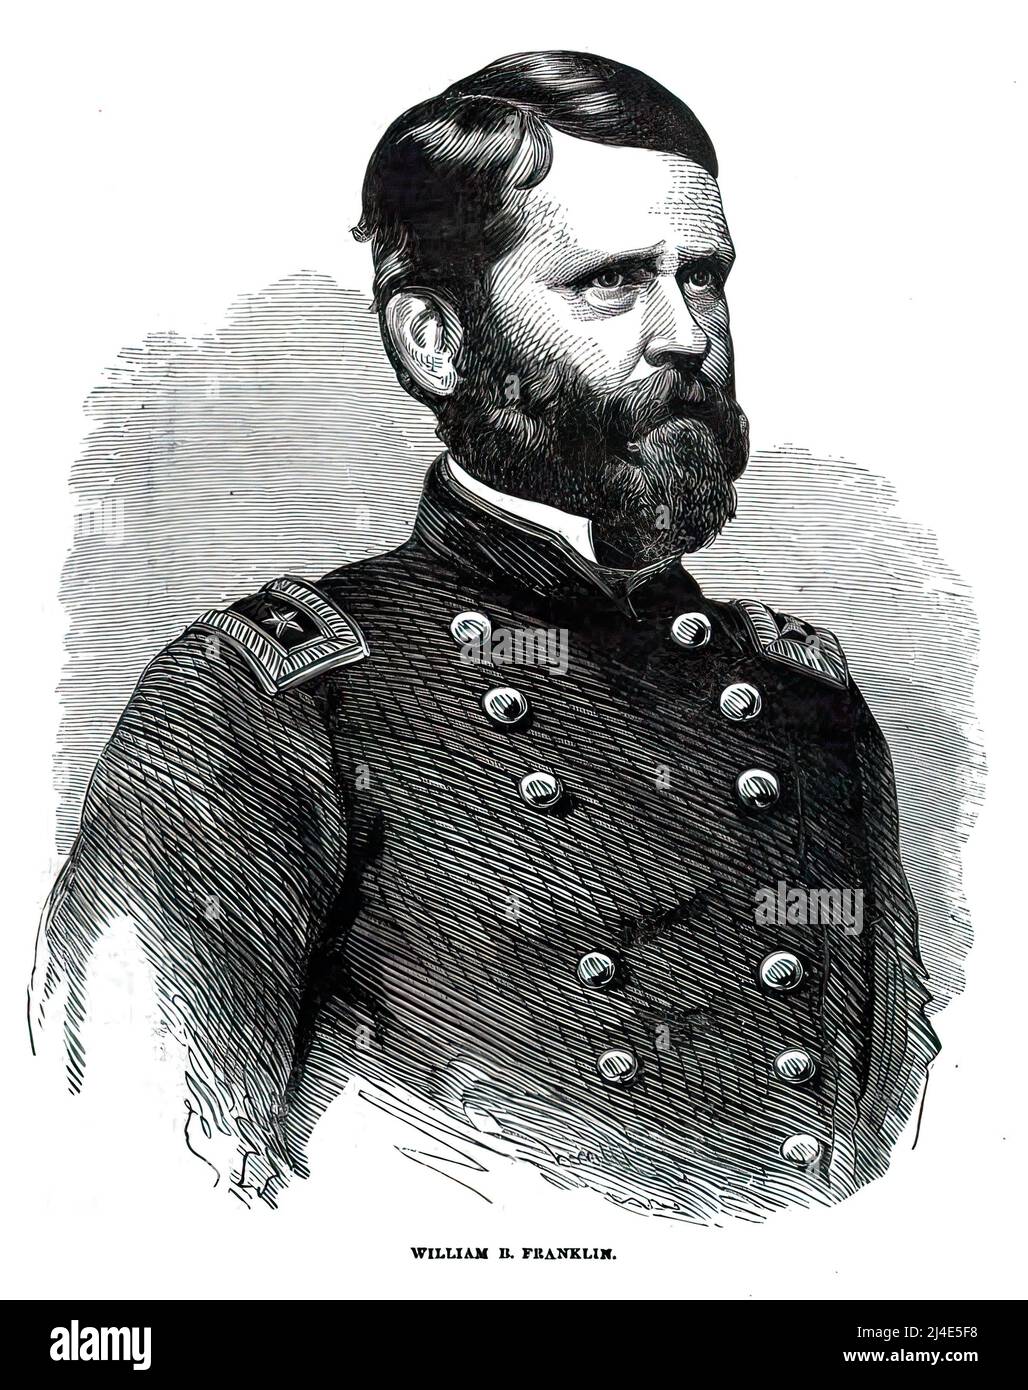 William Buel Franklin, Union Army General in the American Civil War. 19th century illustration. Stock Photo